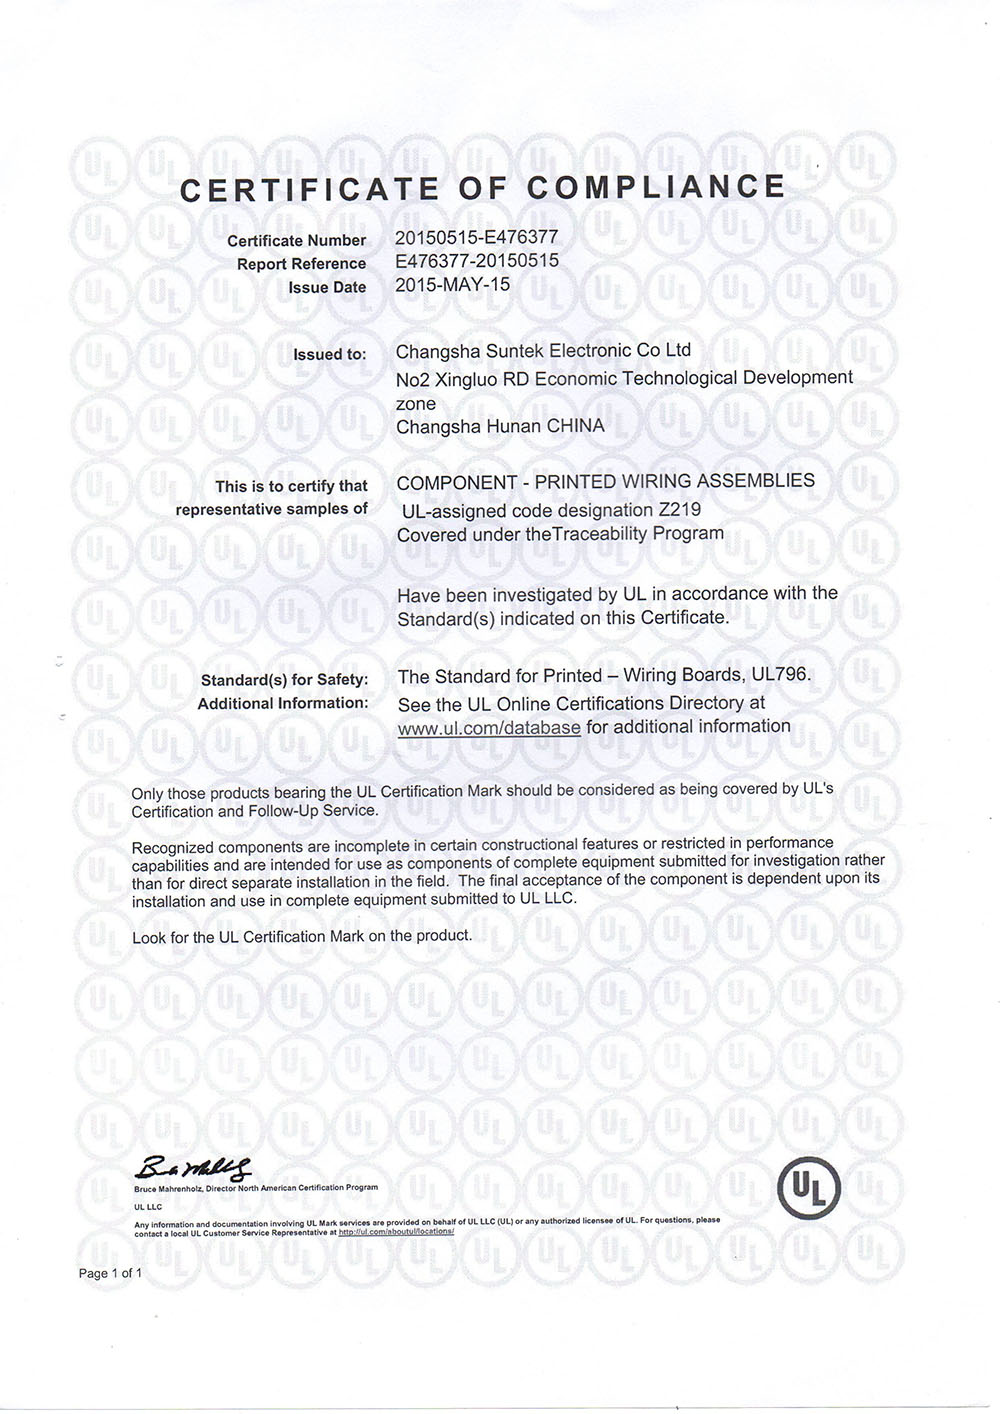 Suntek Certificate UL